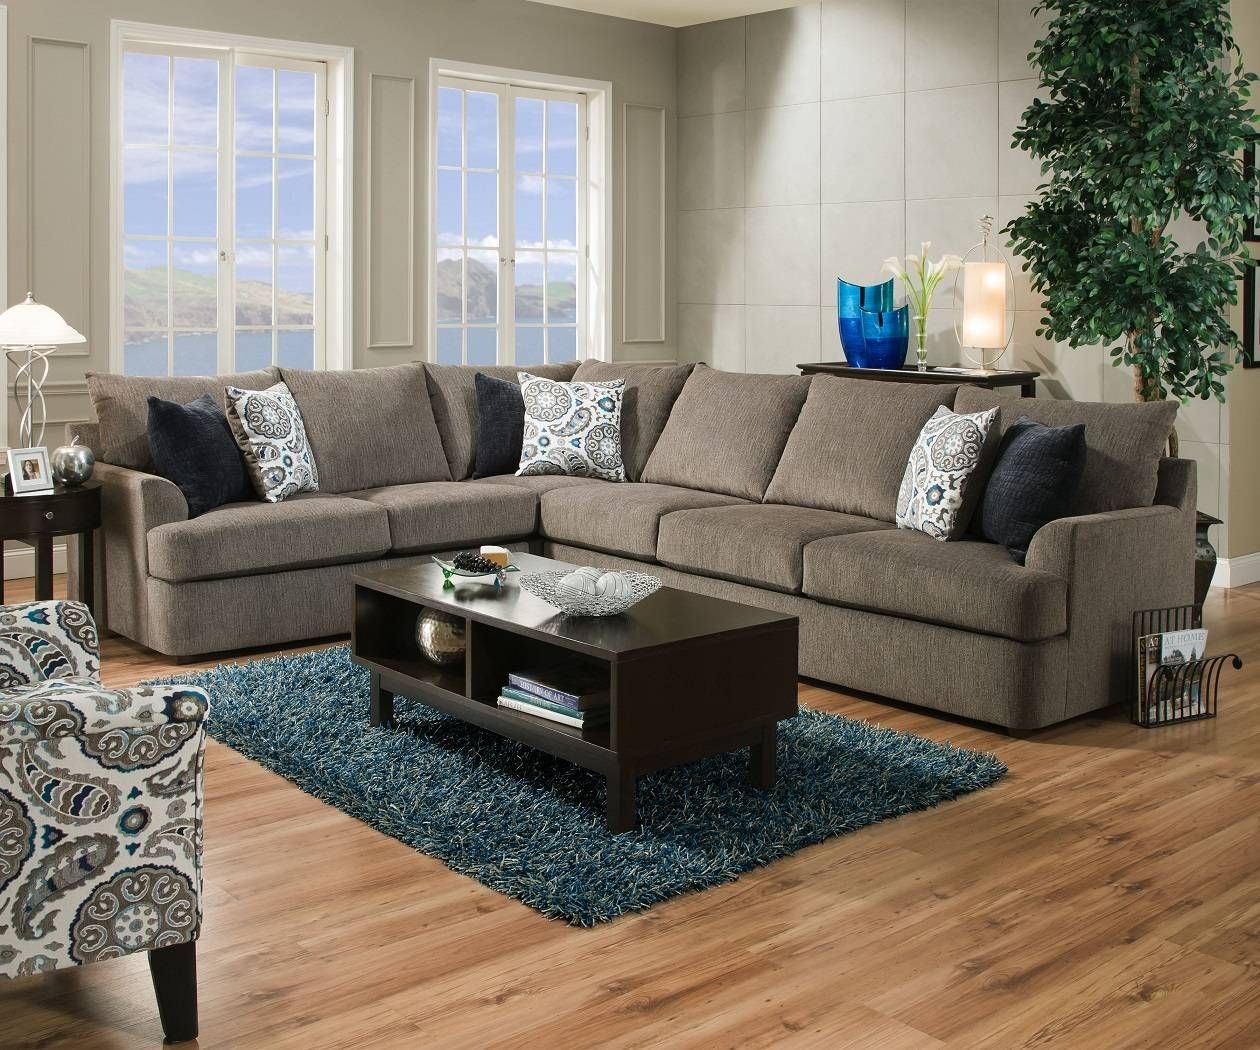 Sofa : Leather Sofas Orange County Home Design Great Luxury To Throughout Sofas Orange County (View 11 of 30)